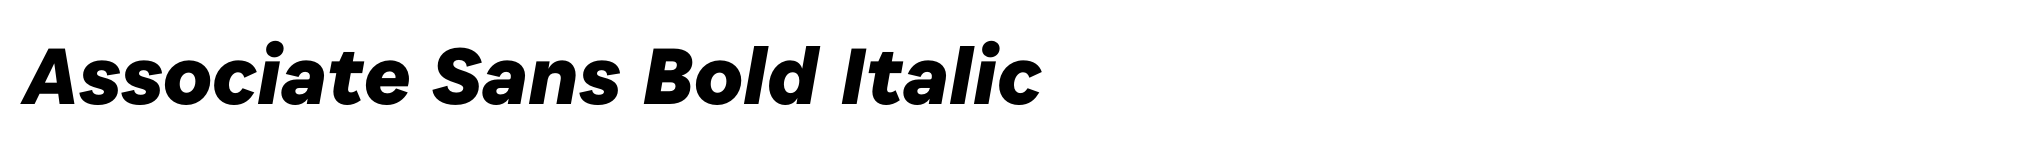 Associate Sans Bold Italic image